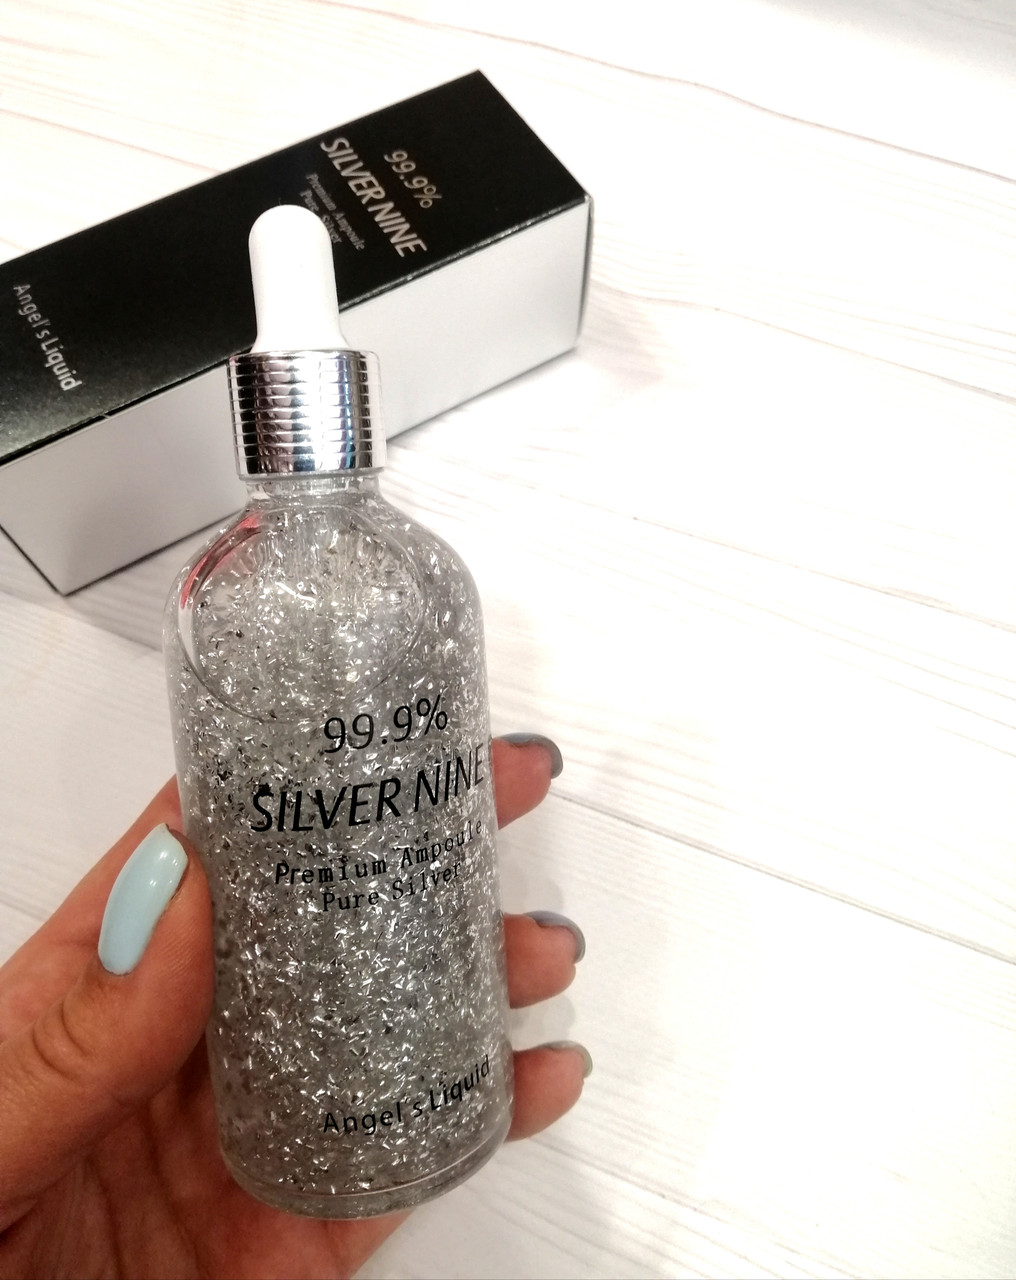 Сироватка із чистим сріблом 99.9% Silver Nine Ampoule Pure Silver Premium